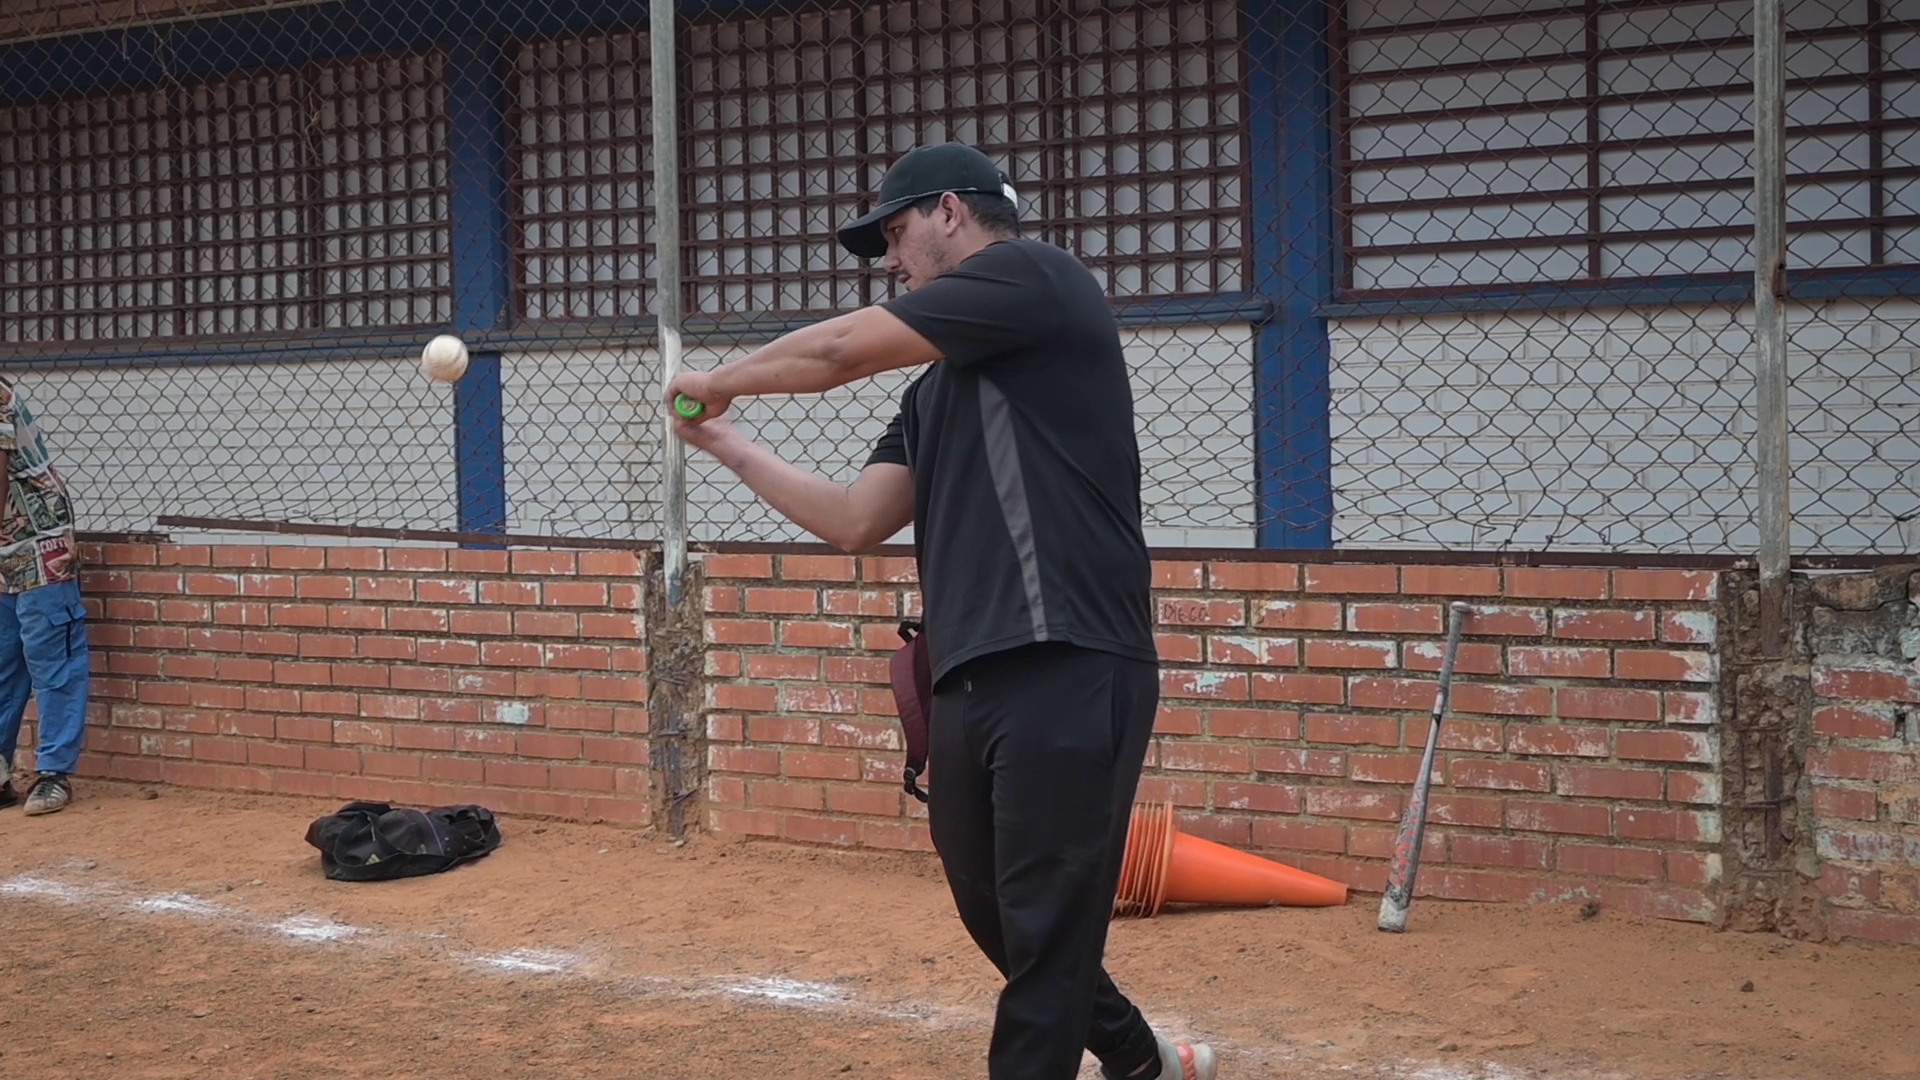 Práctica de béisbol en las canchas de Cúcuta